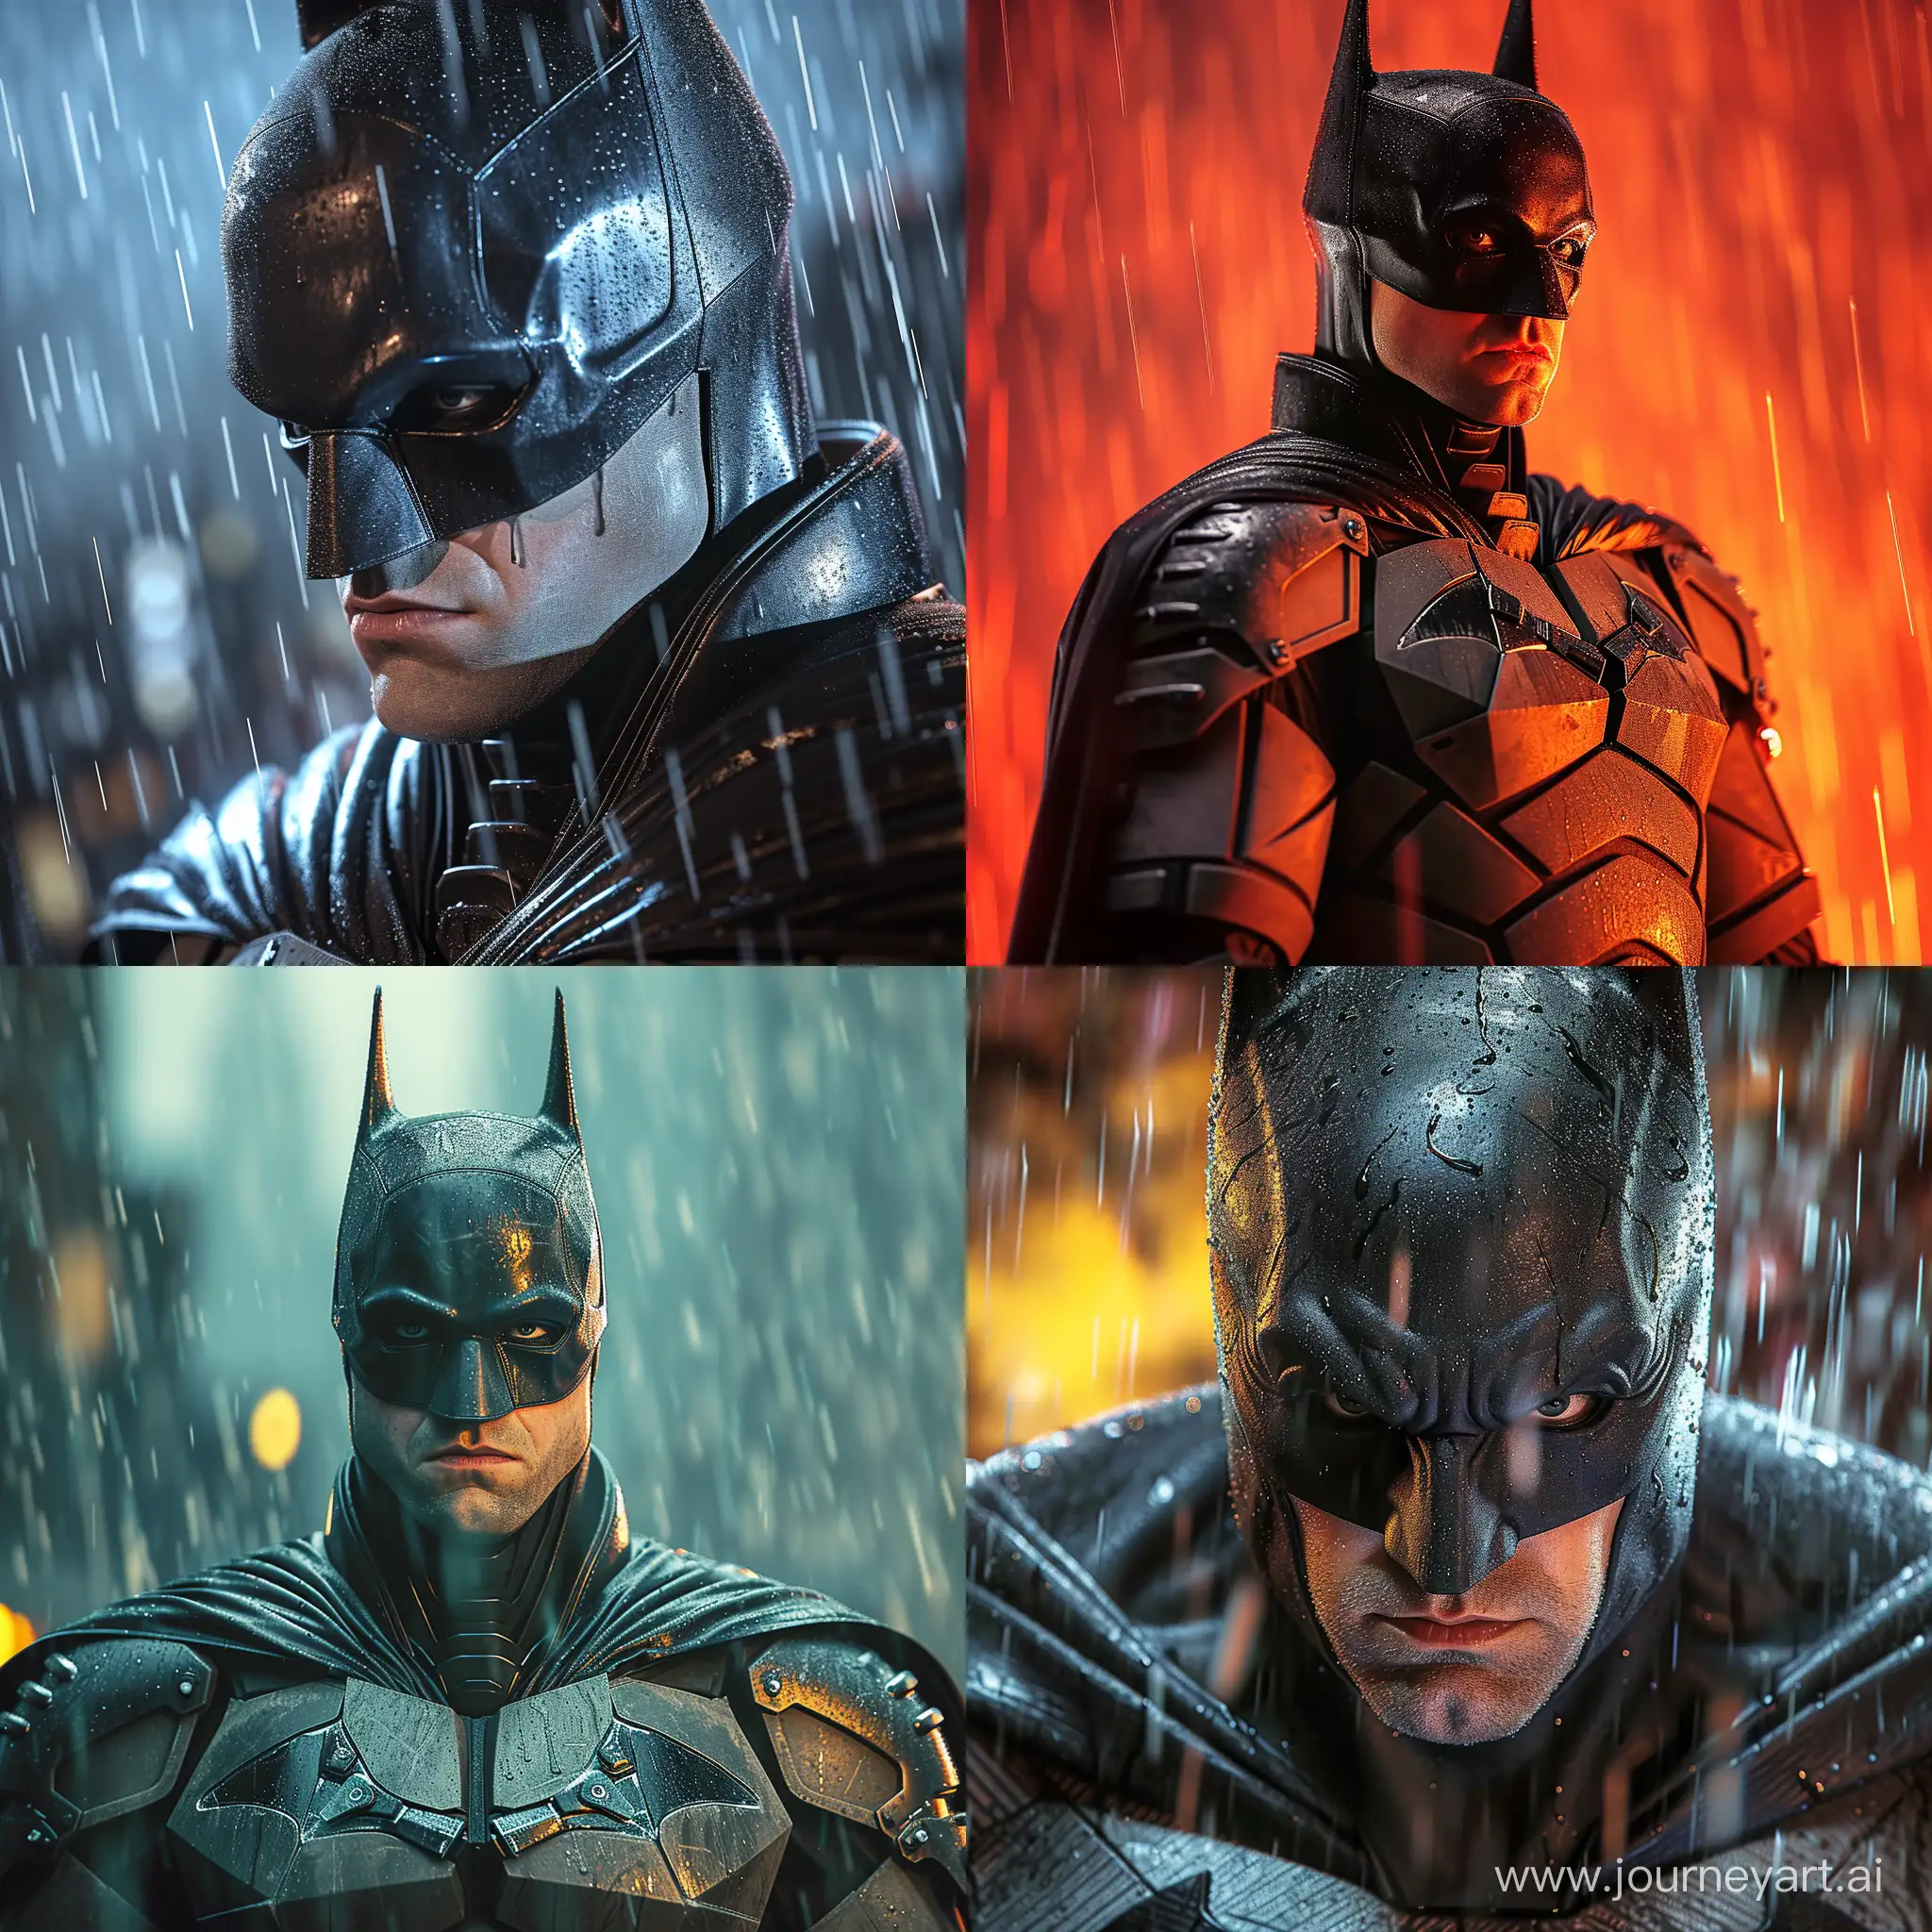 Dynamic-CloseUp-of-Batman-in-Rainy-Scene